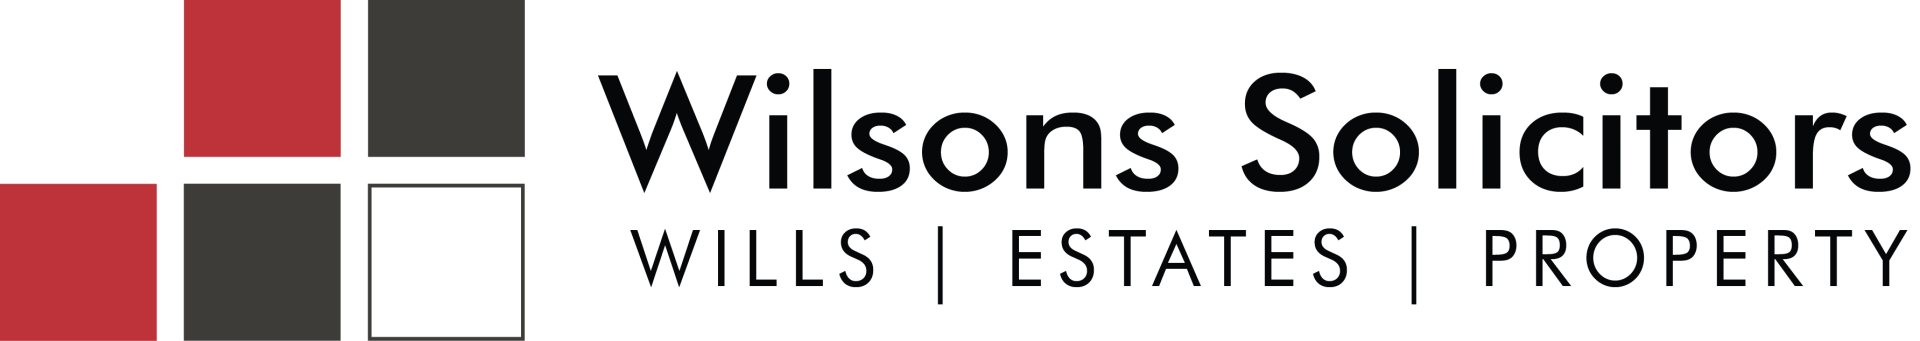 Wilson Solicitors & Attorneys | Wills | Estates | Conveyances